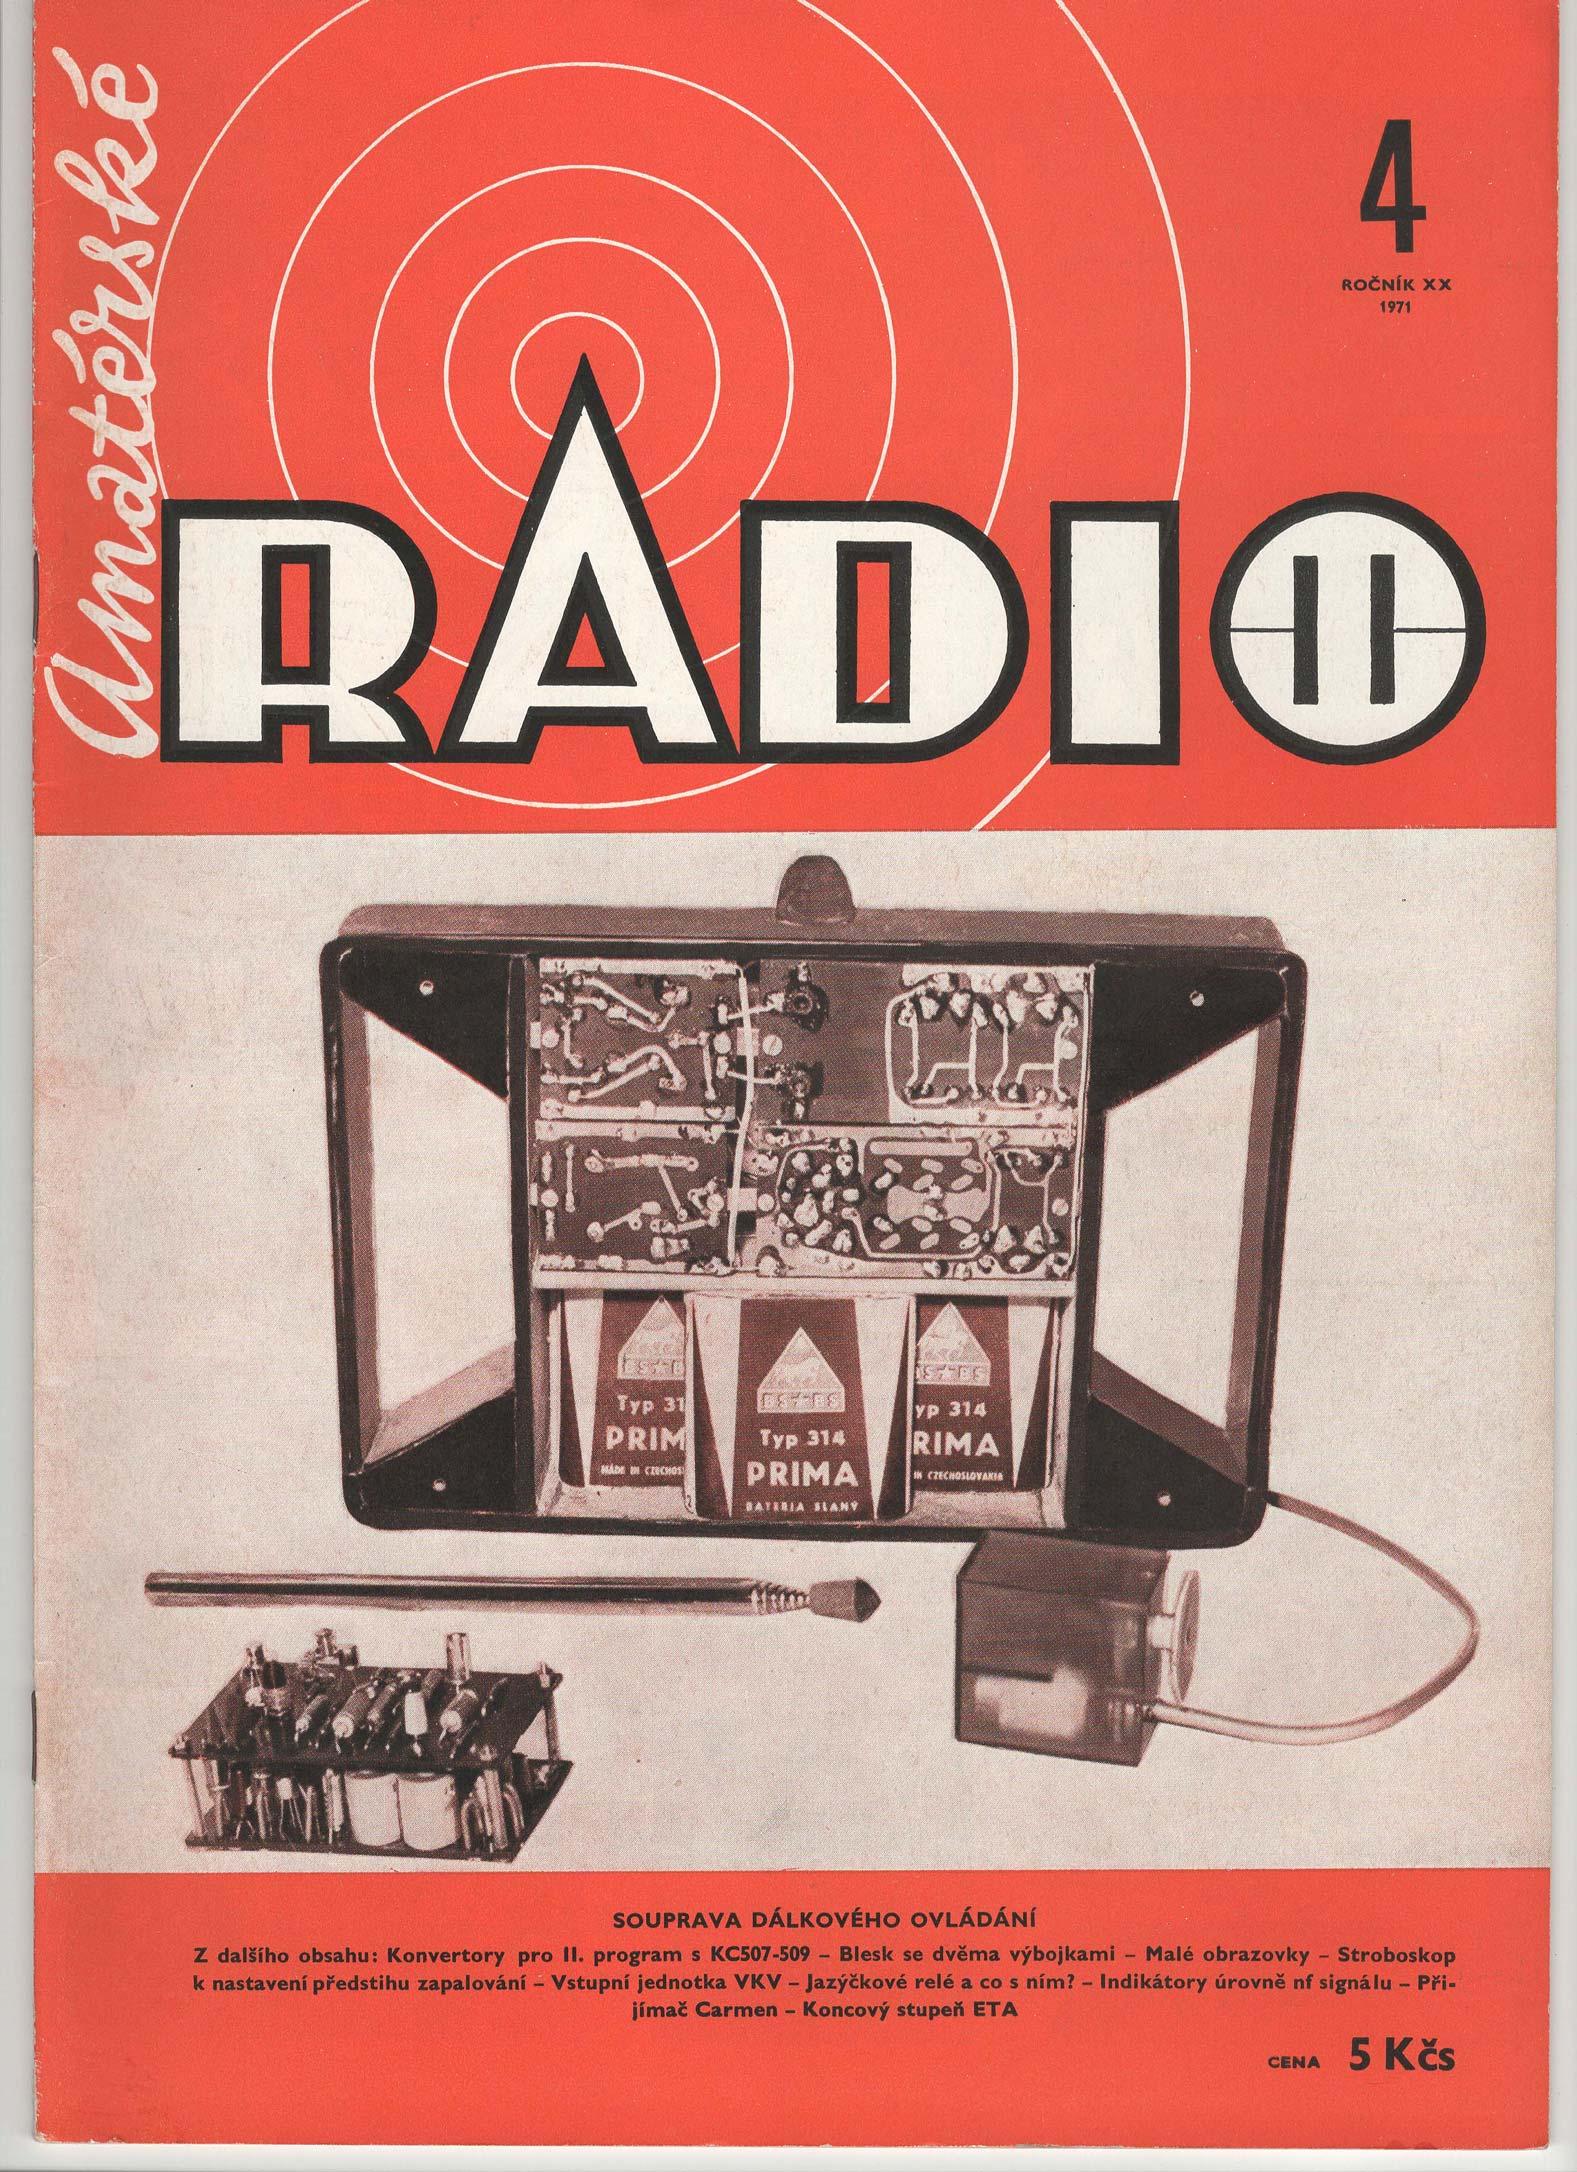 Amaterske Radio Magazine - 4 Rocnik XX 1971 - Rare Collectable